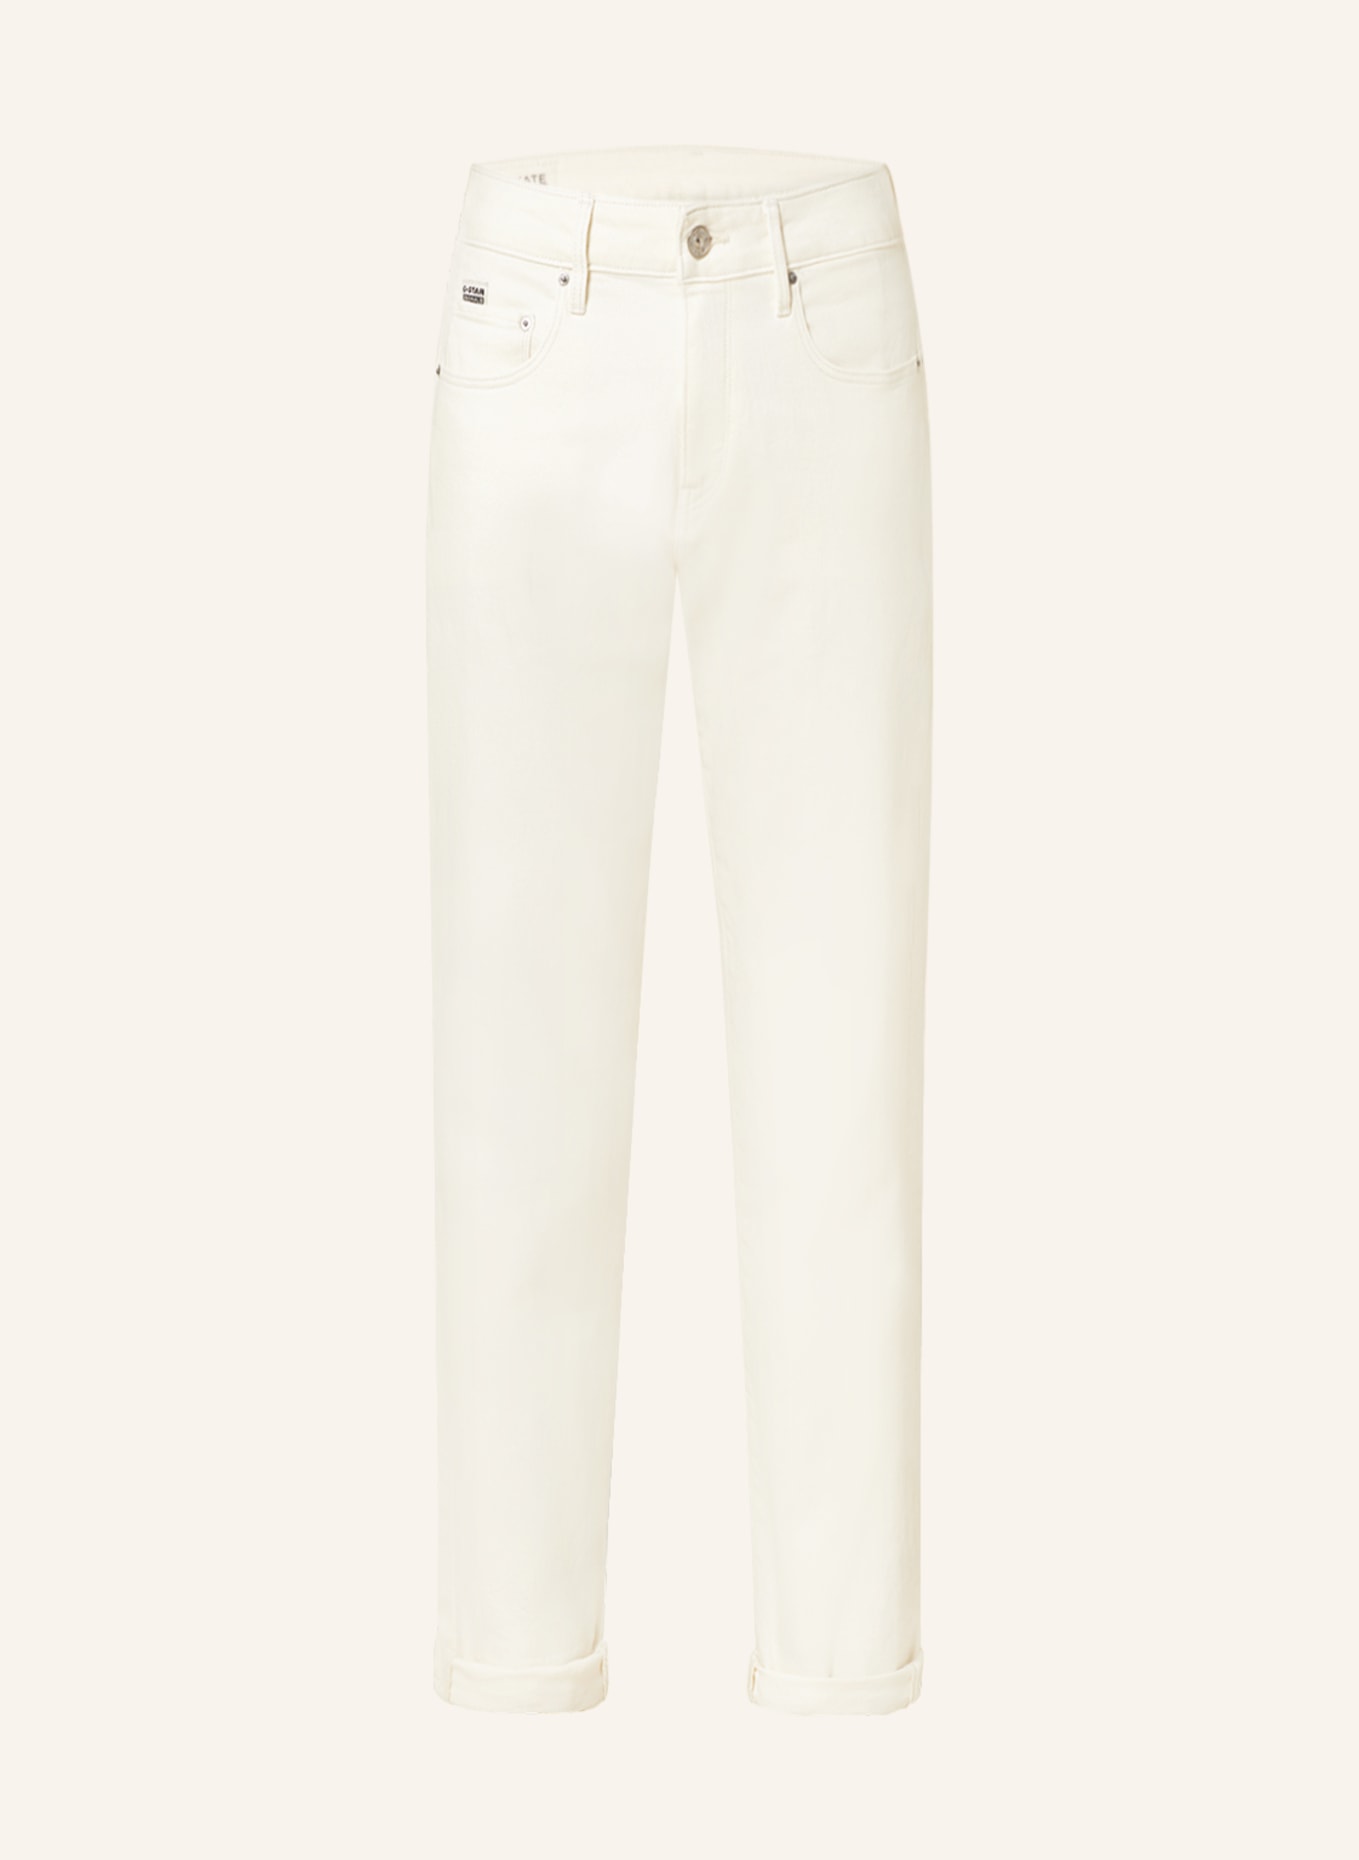 G-Star RAW 7/8-Jeans KATE, Farbe: G547 paper white gd (Bild 1)